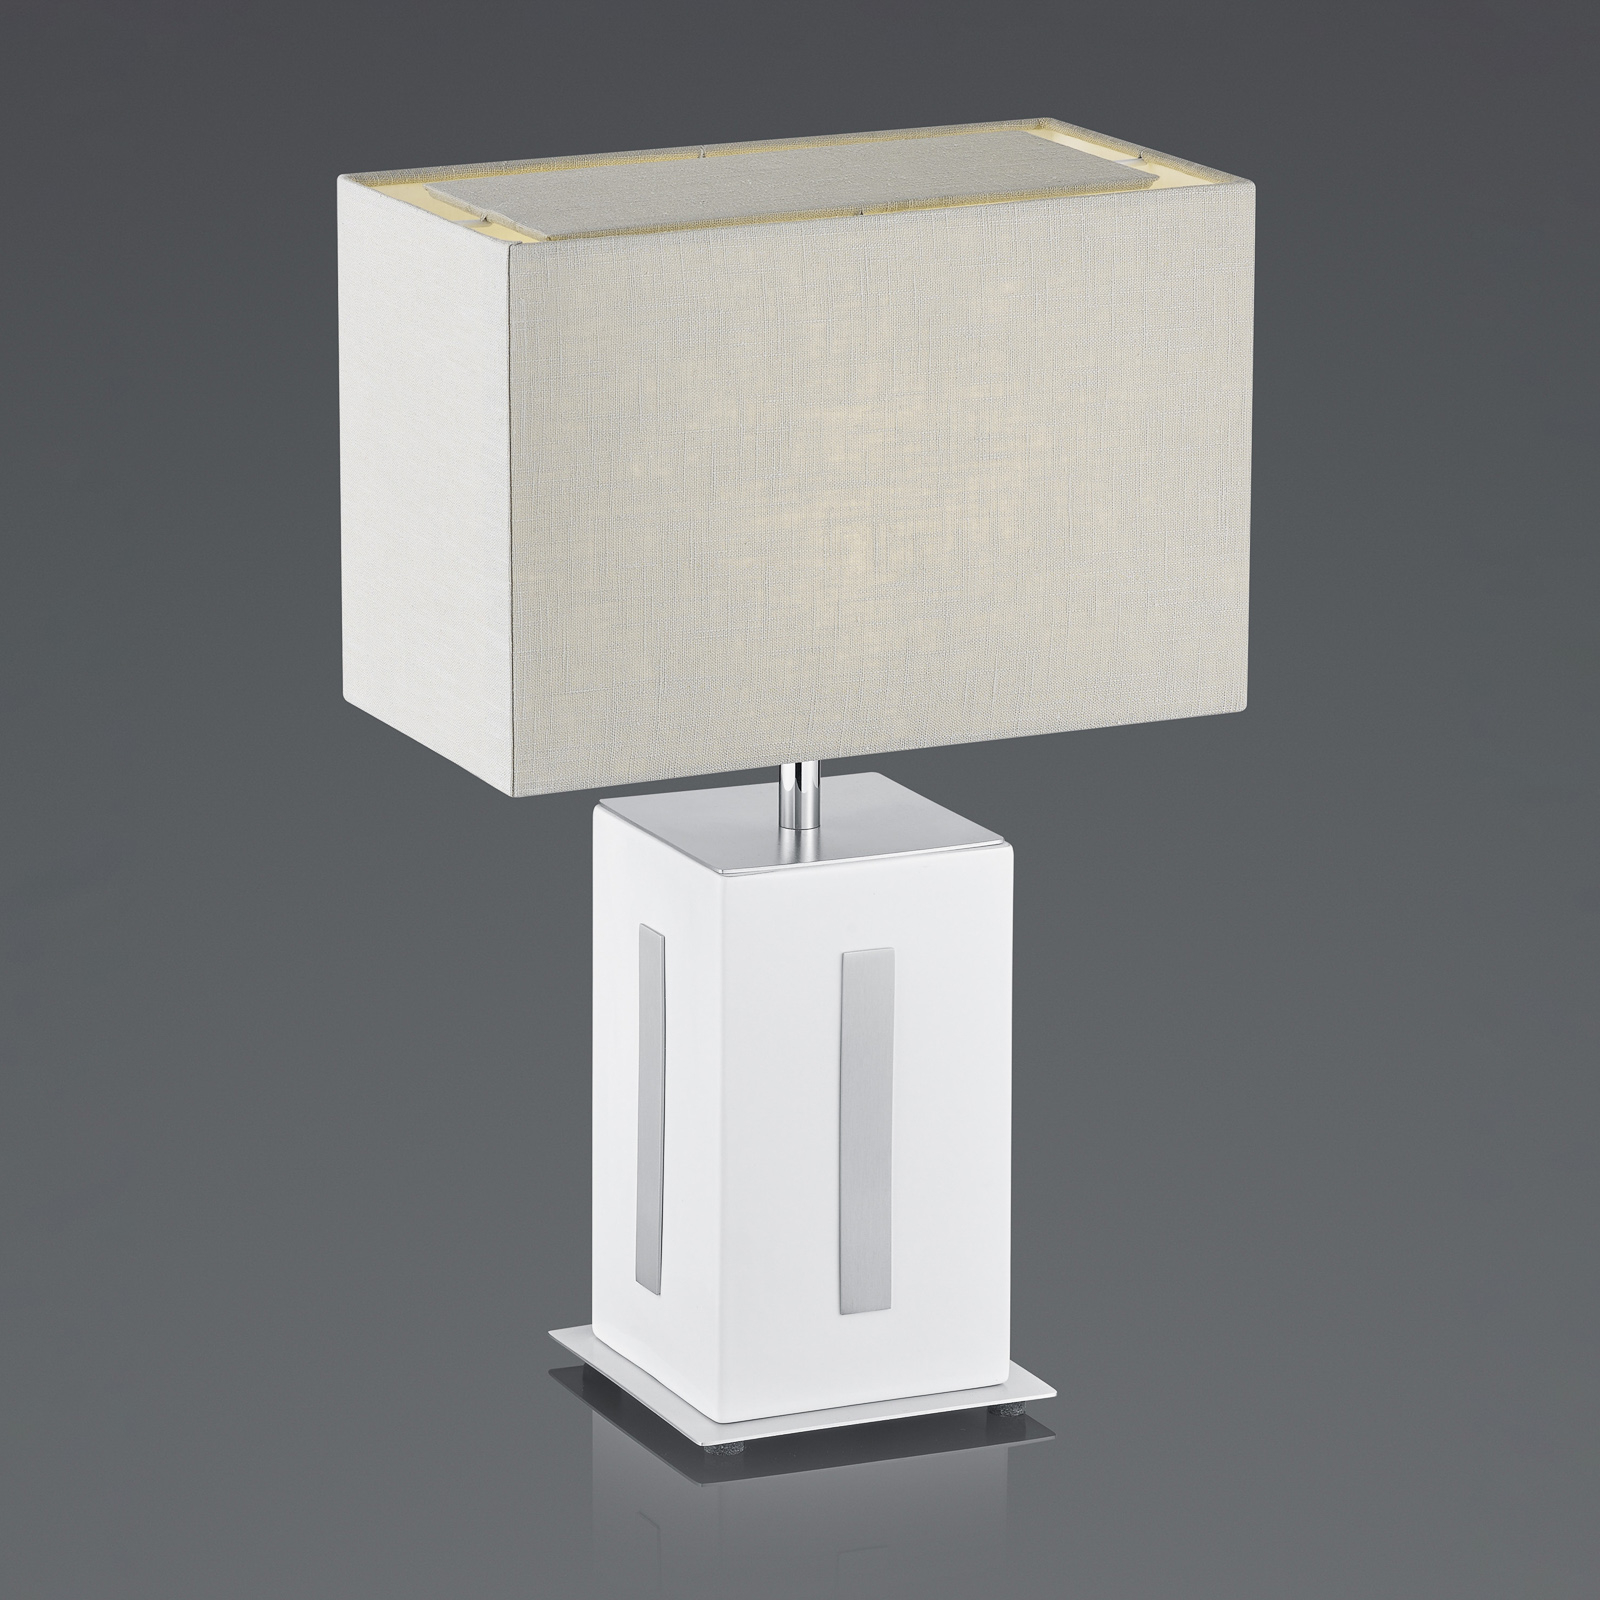 BANKAMP Karlo table lamp white/grey, height 47 cm